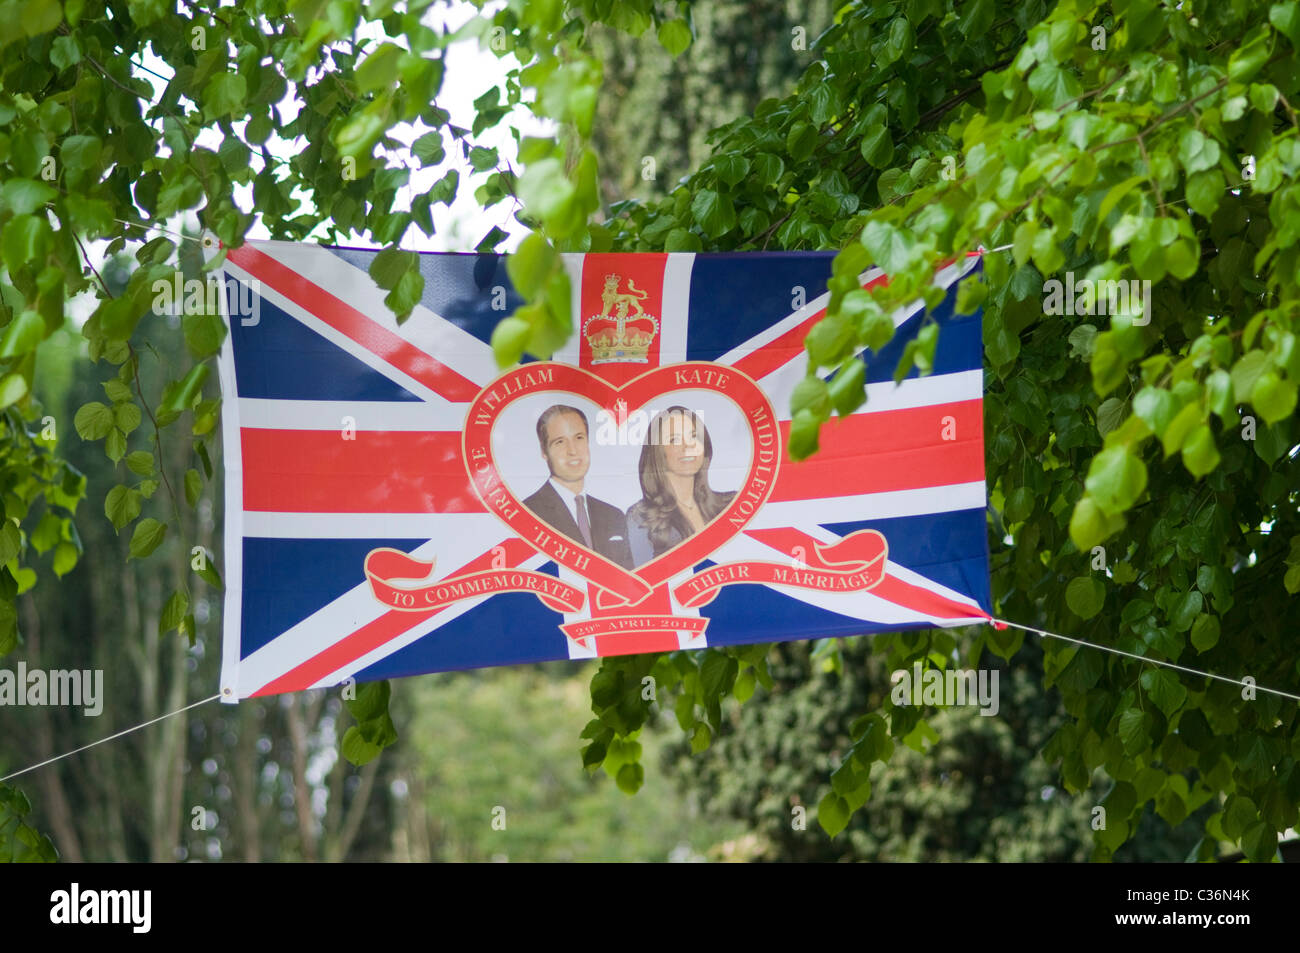 Flag of Prince William and Catherine Middleton for Royal Wedding Celebration in Banham, Norfolk Stock Photo